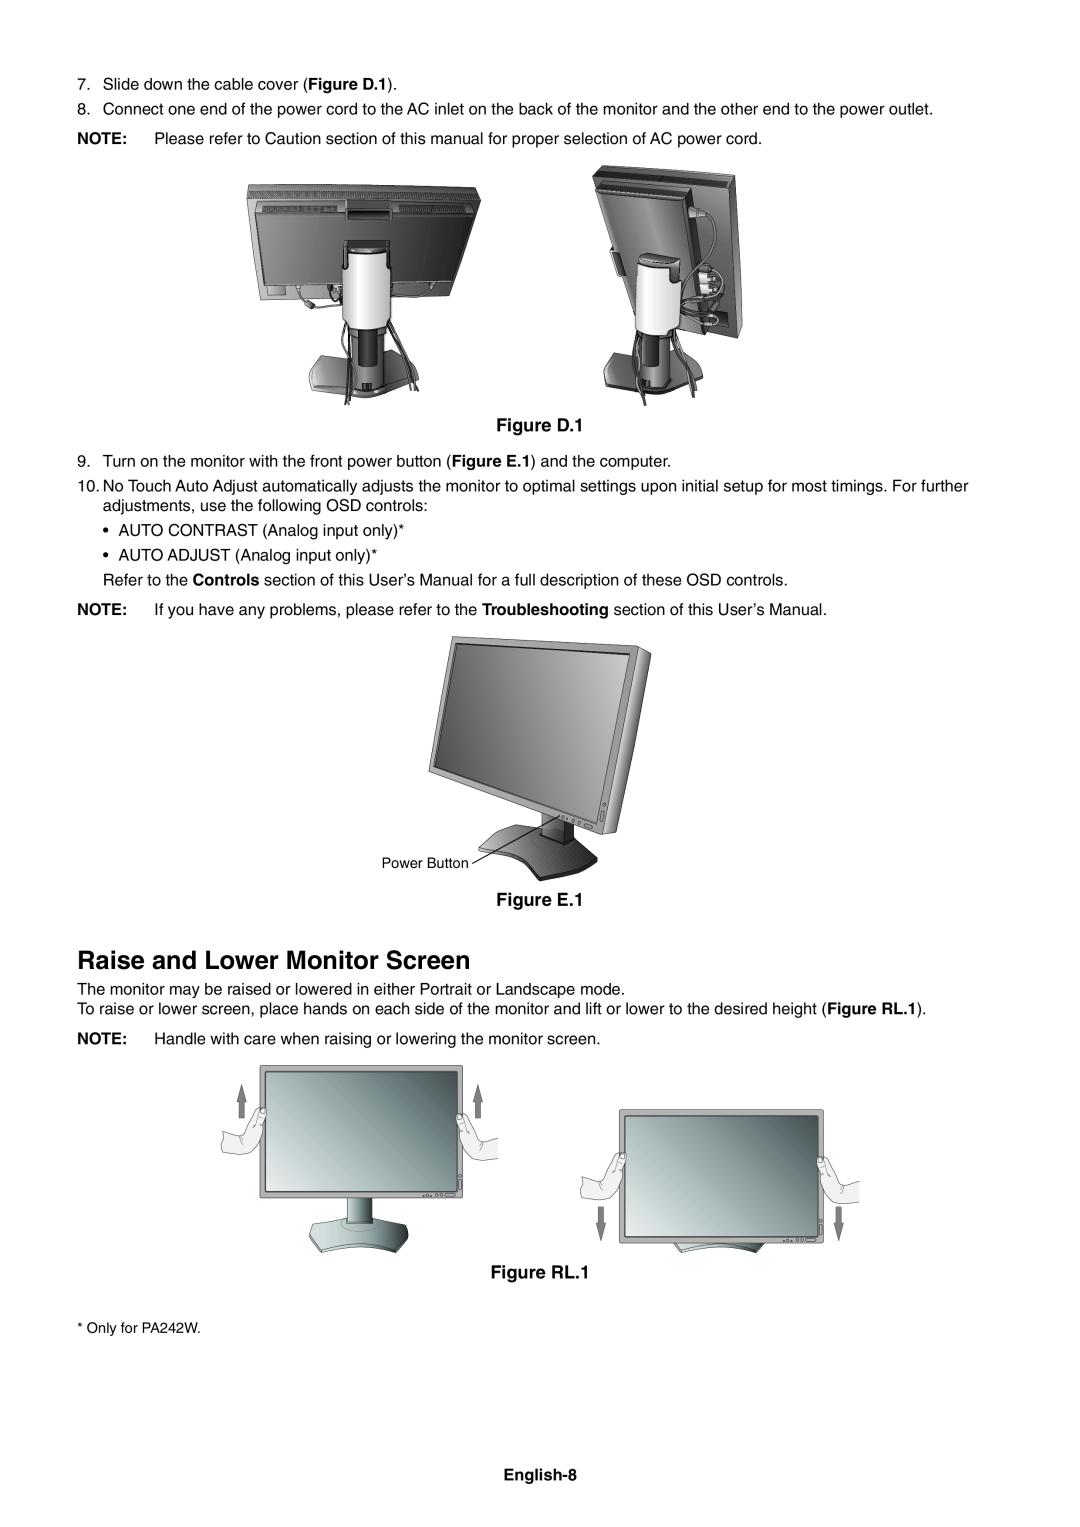 NEC PA242W user manual Raise and Lower Monitor Screen, Figure D.1, Figure E.1, Figure RL.1, English-8 